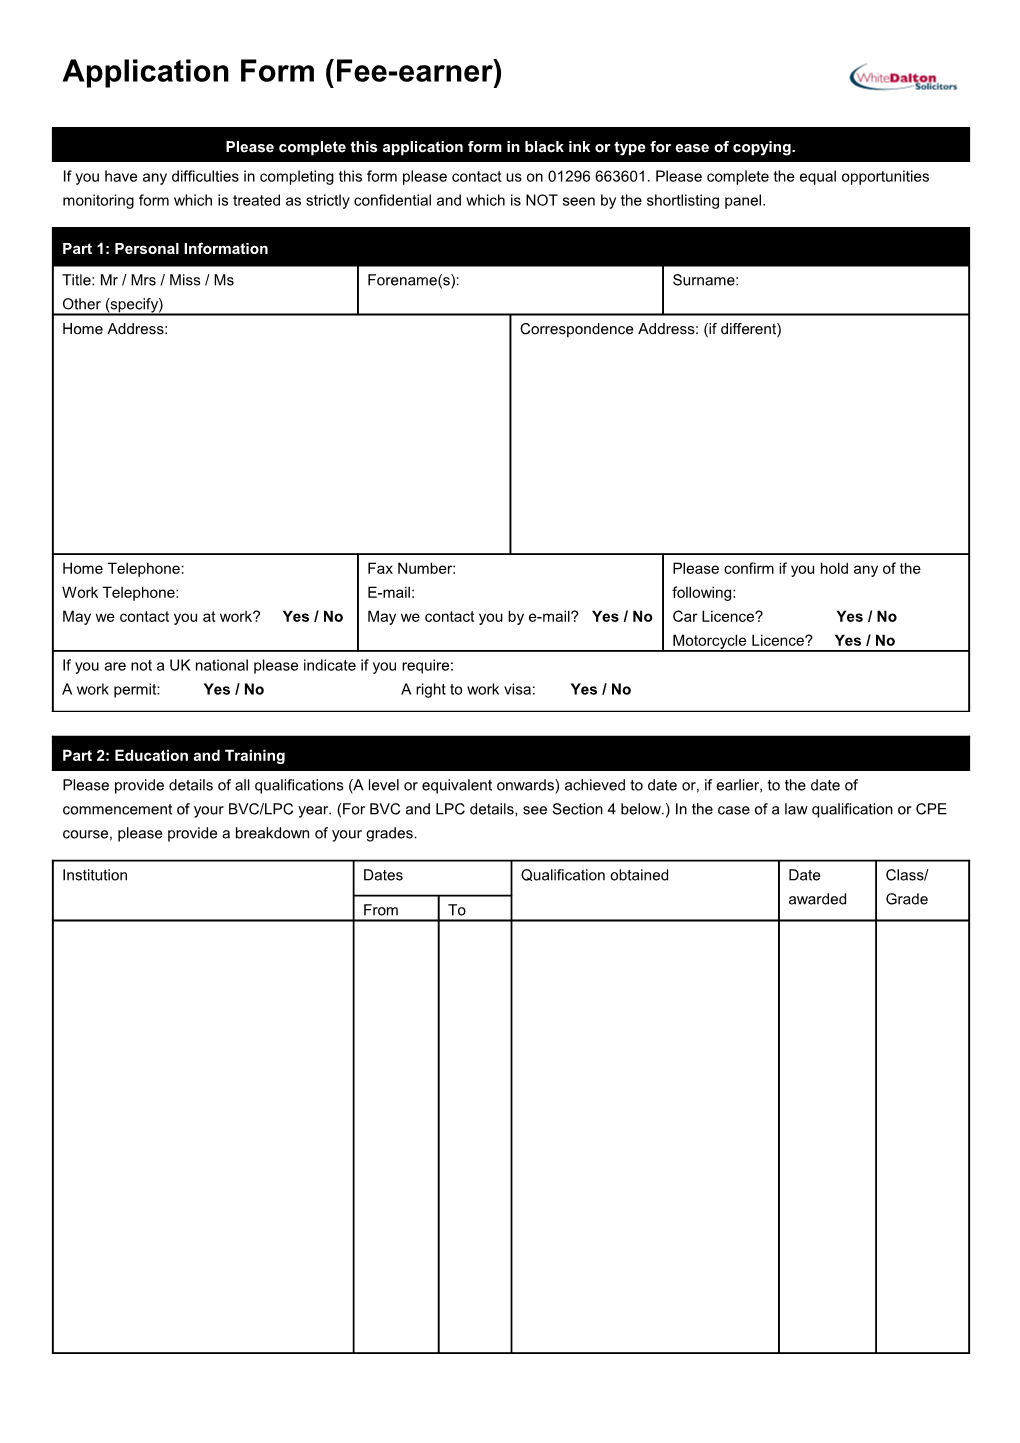 Application Form (Fee-Earner)